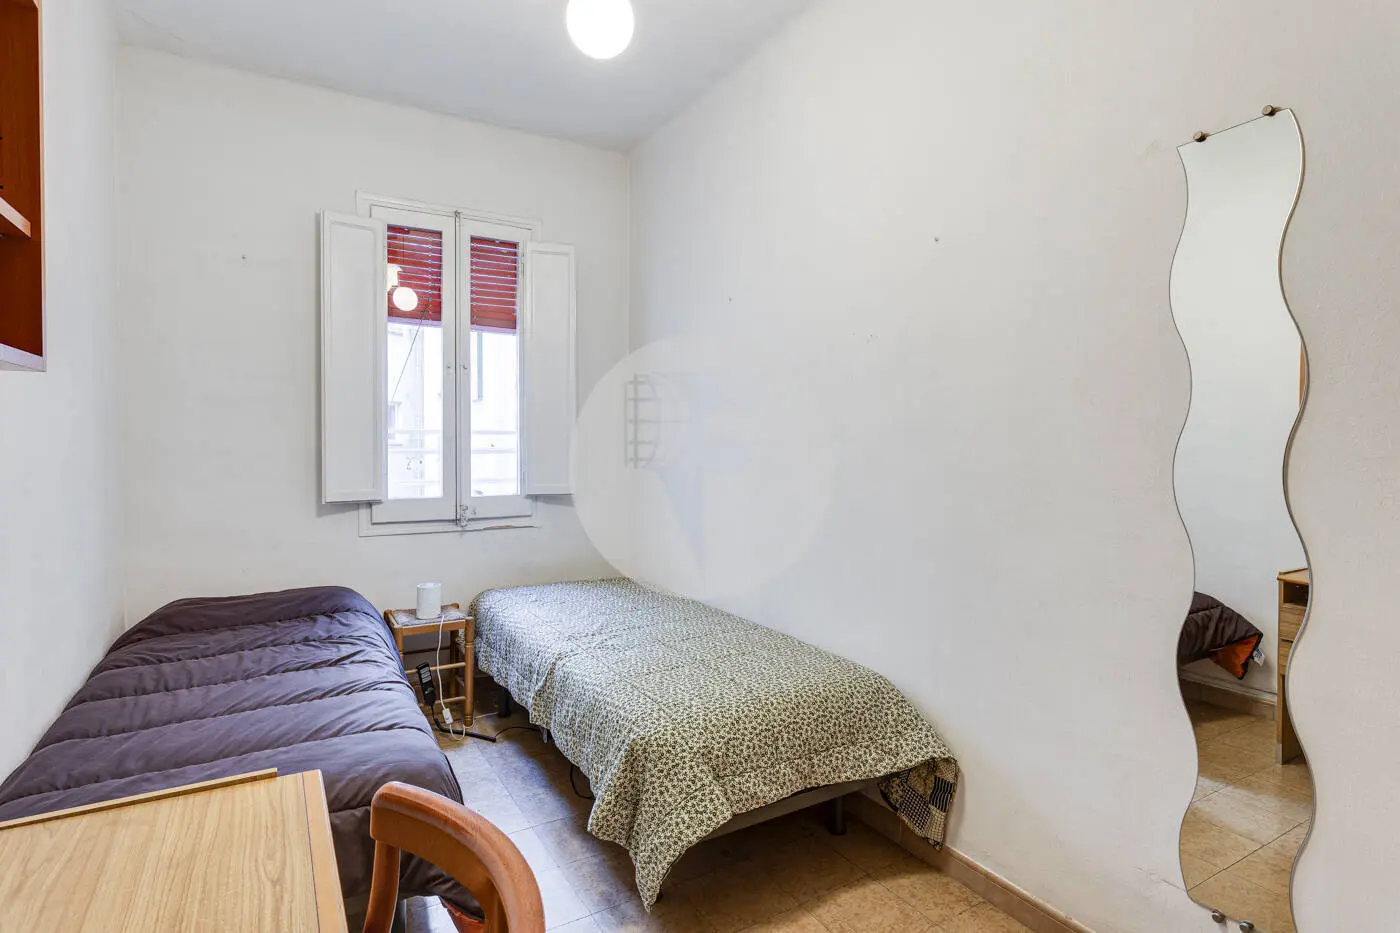 3-bedroom apartment located in the Nova Esquerra de l'Eixample neighborhood of Barcelona. 23